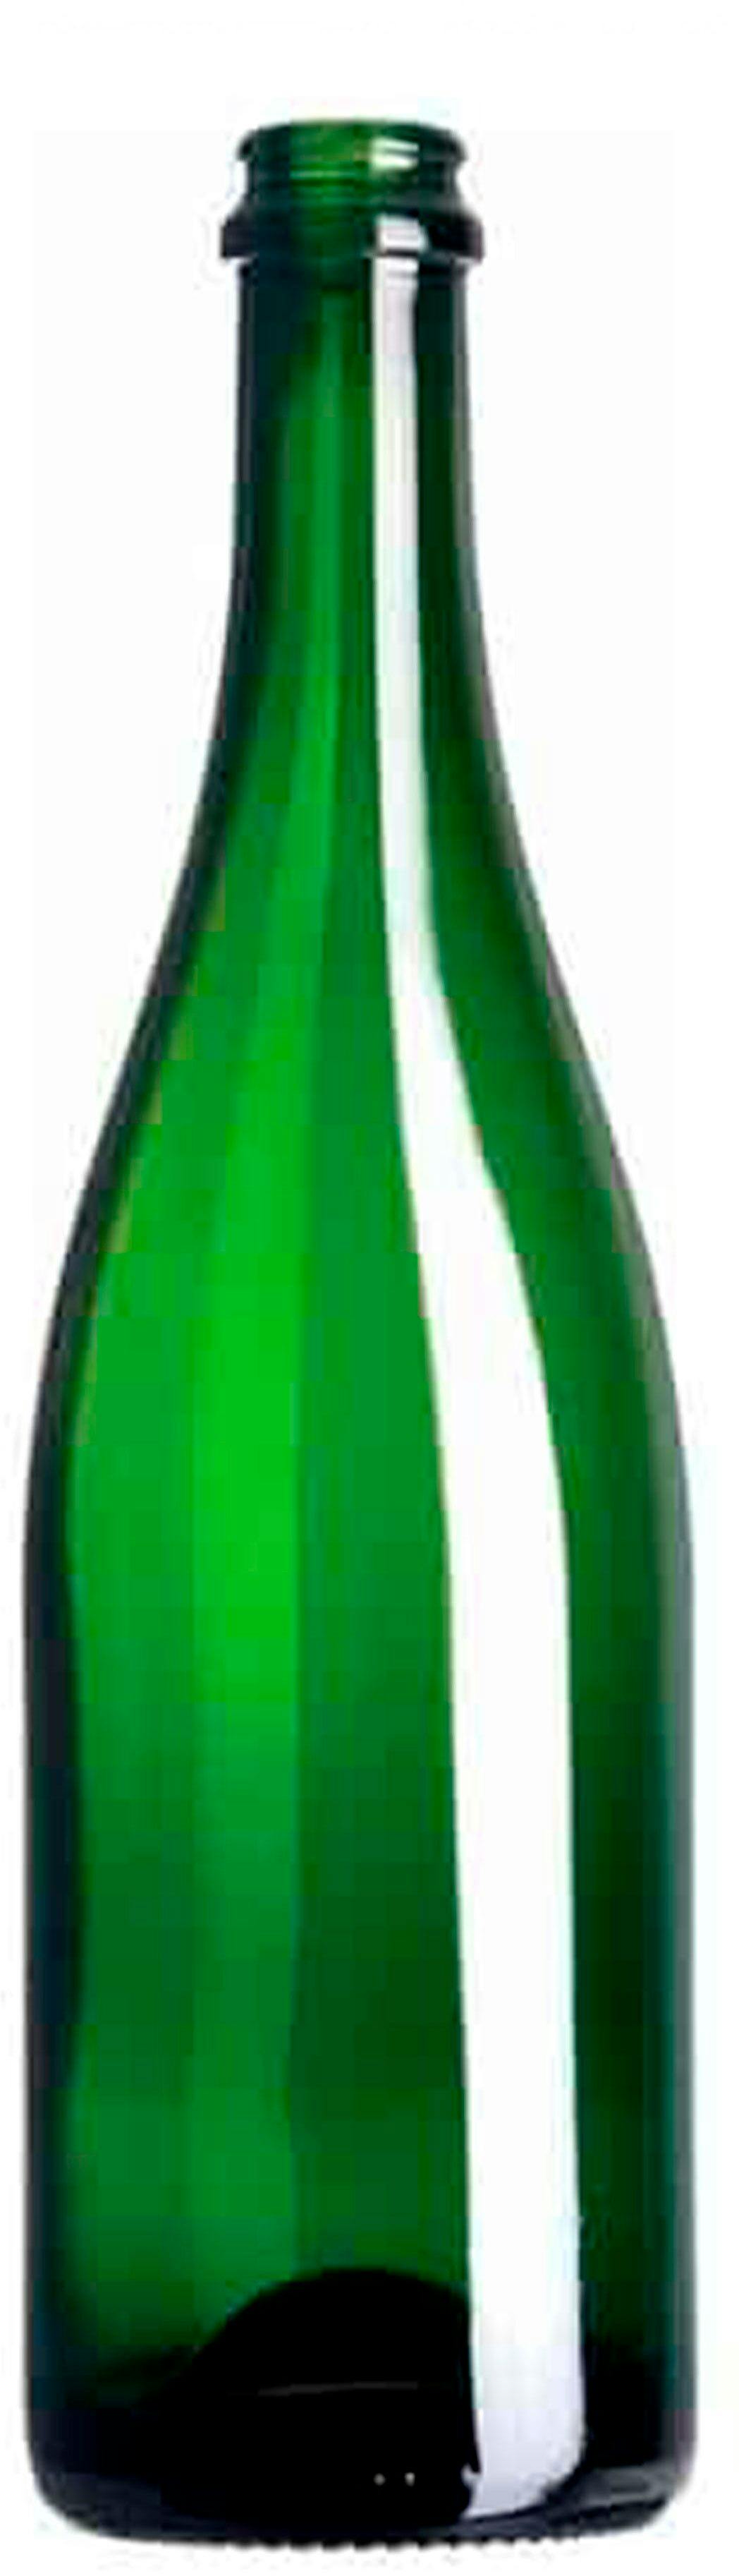 Botella CREMANT  750 ml Corona 29 ExtraBaja - 18mm